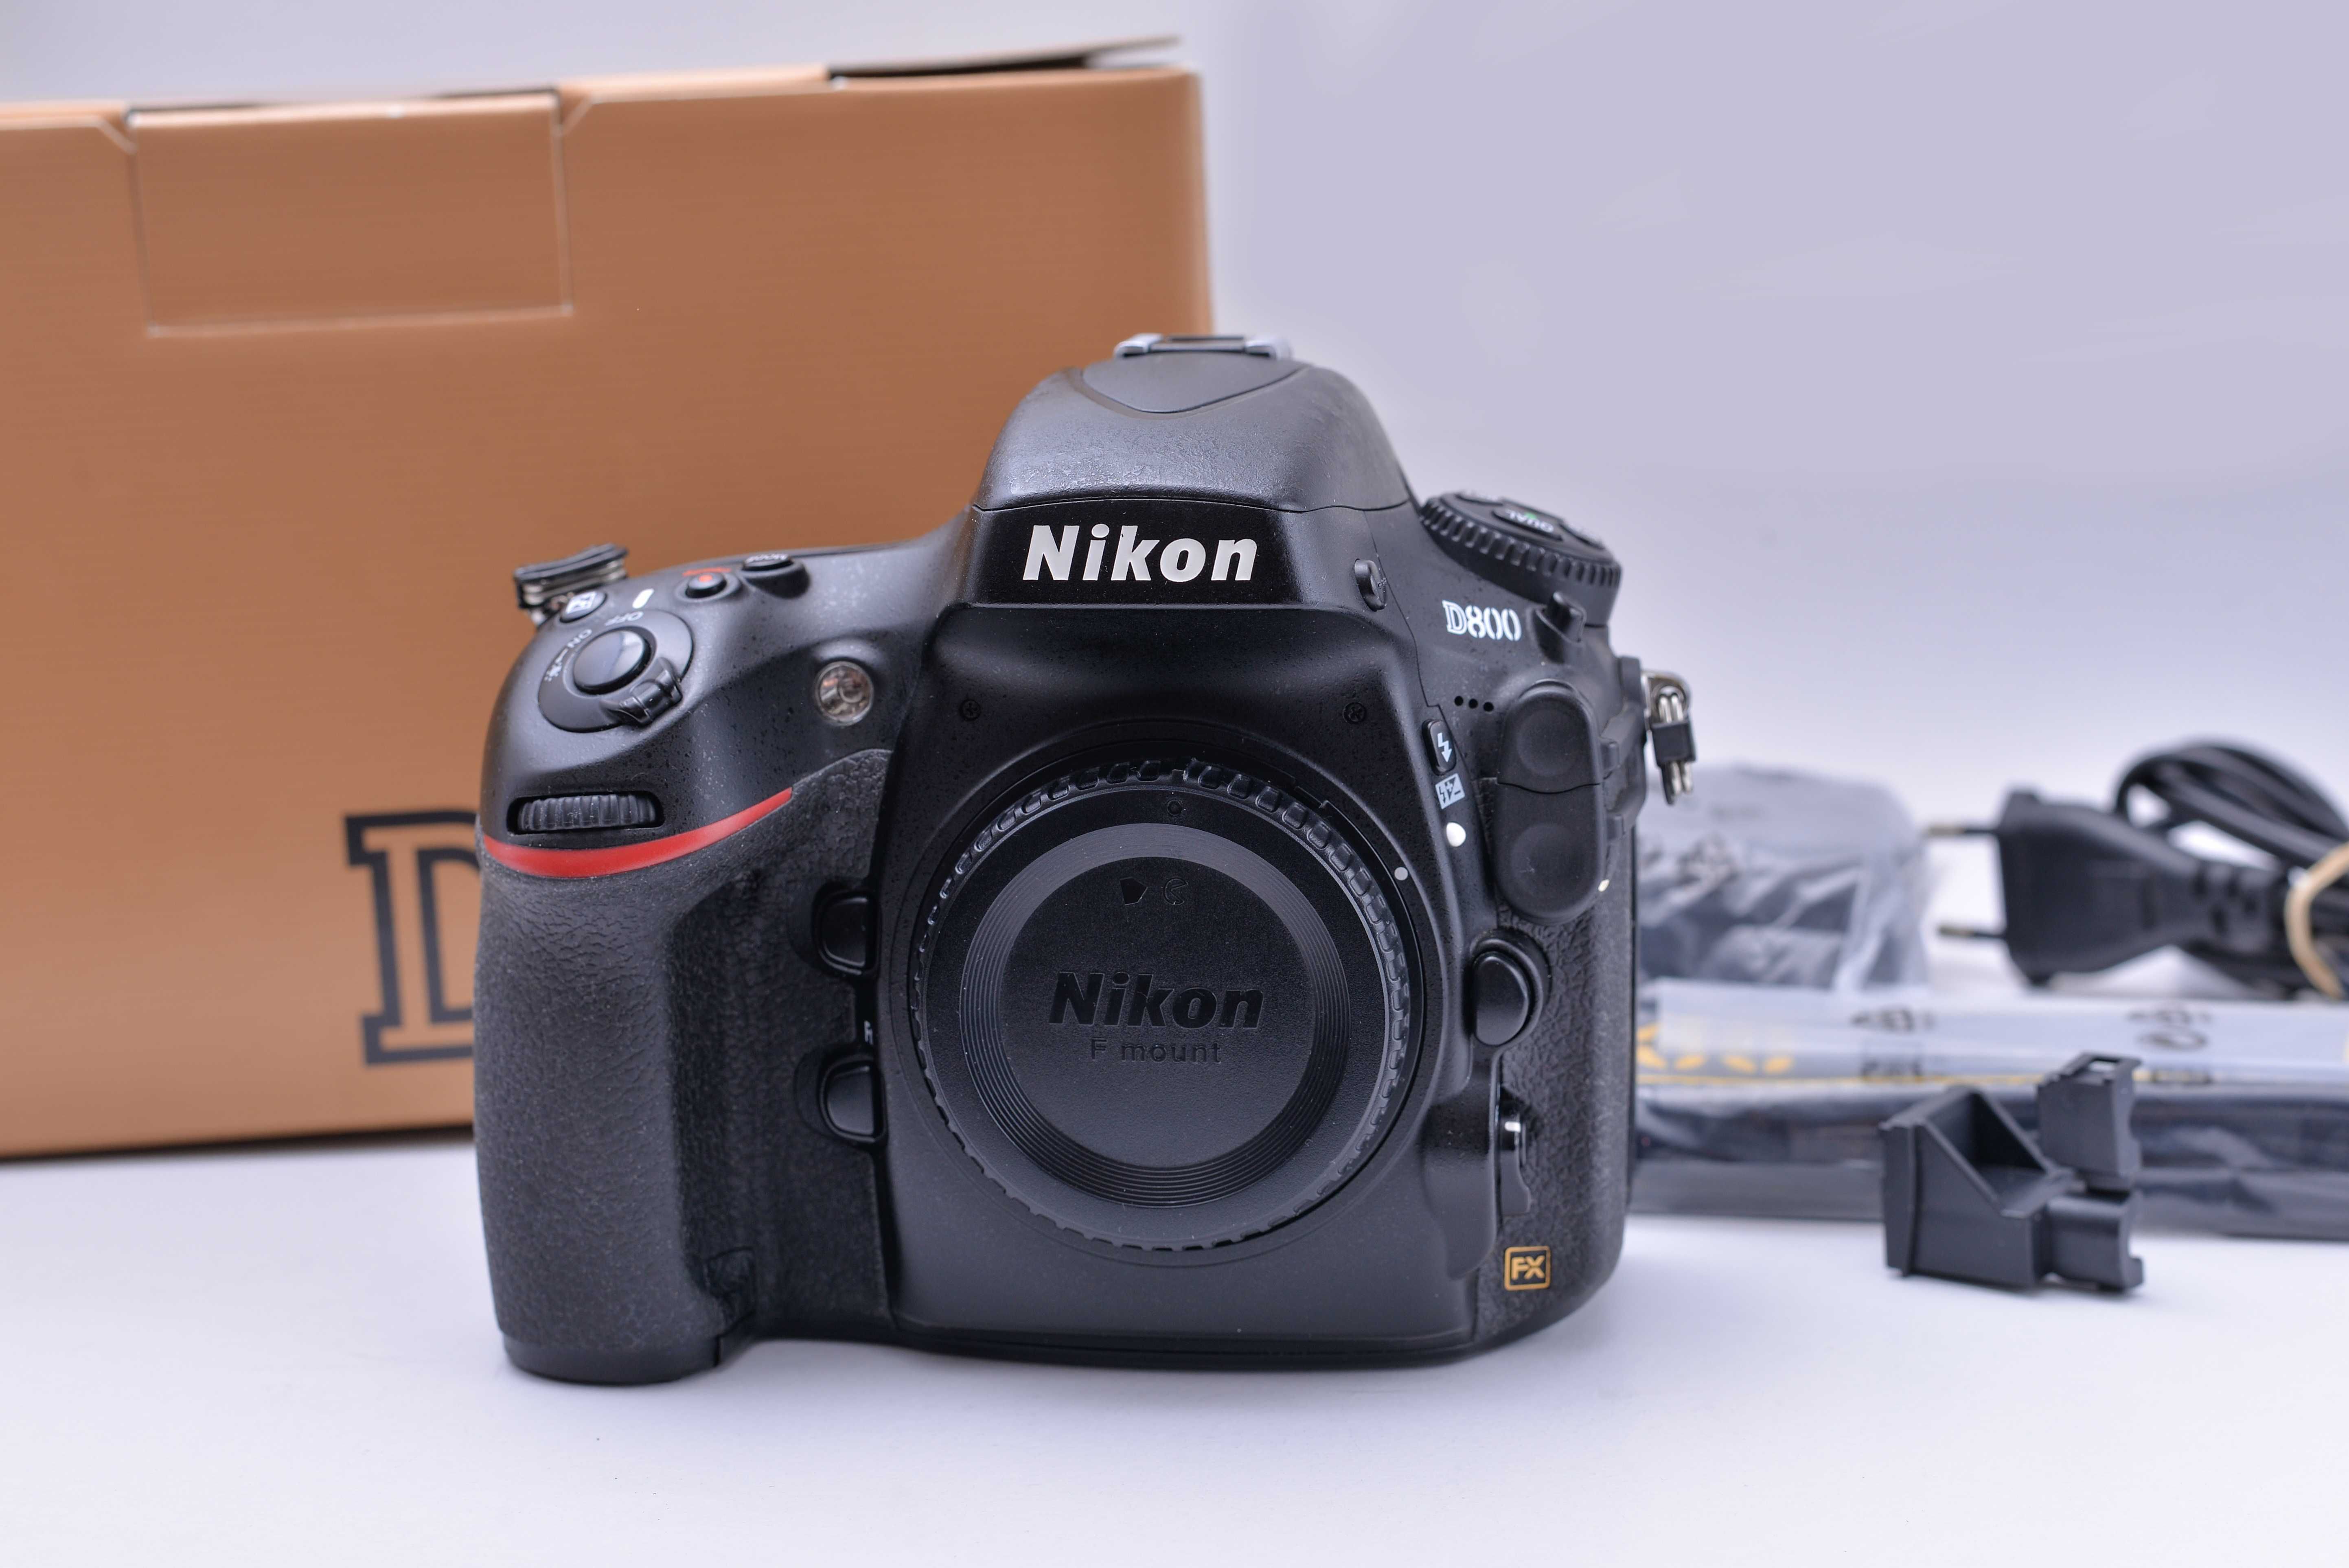 Nikon D800 Excelente estado (26738 disparos) NOVO PREÇO